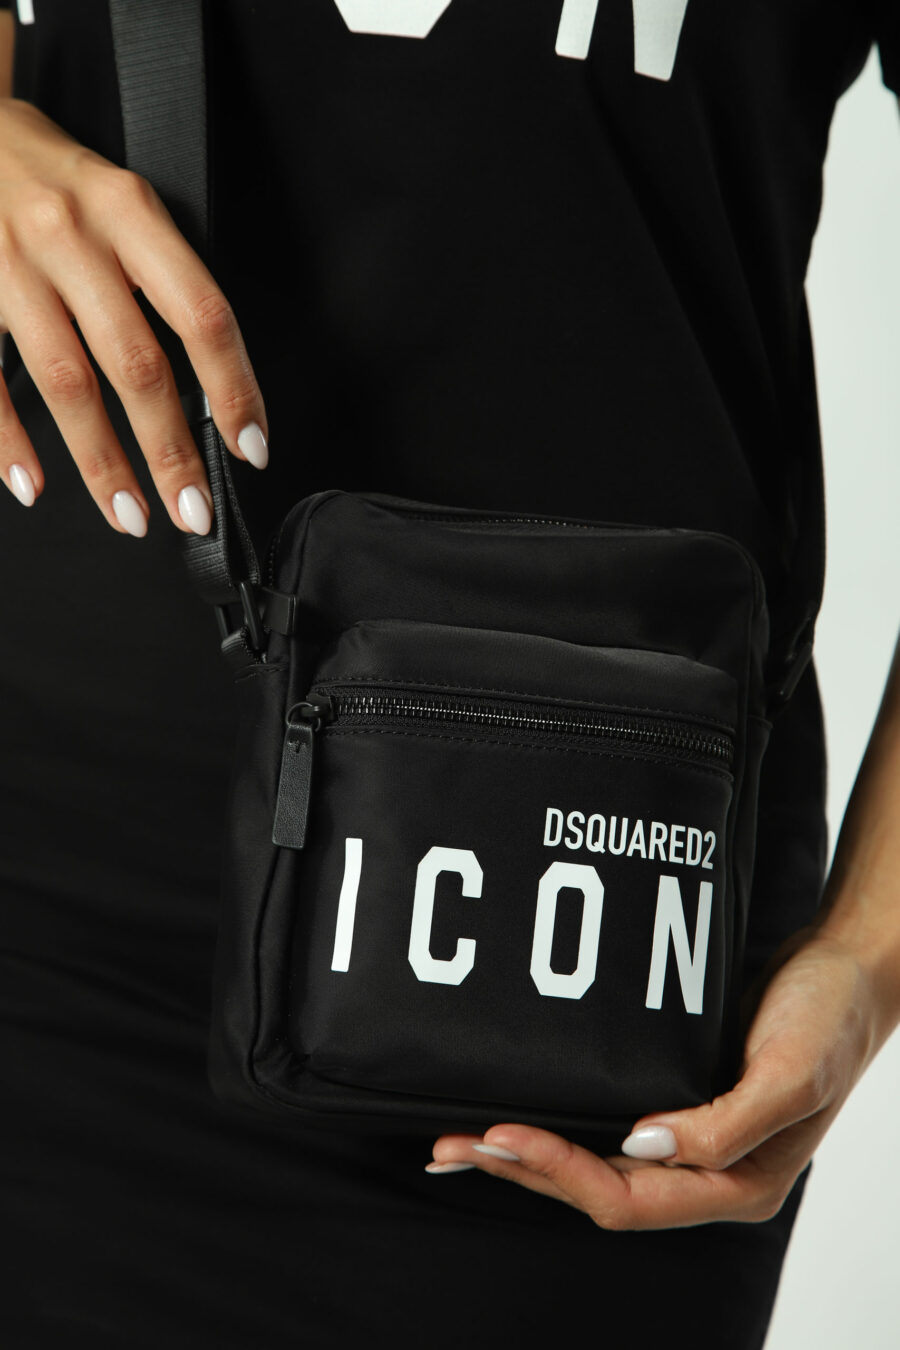 Black shoulder bag with white "icon" logo - 8055777028971 2